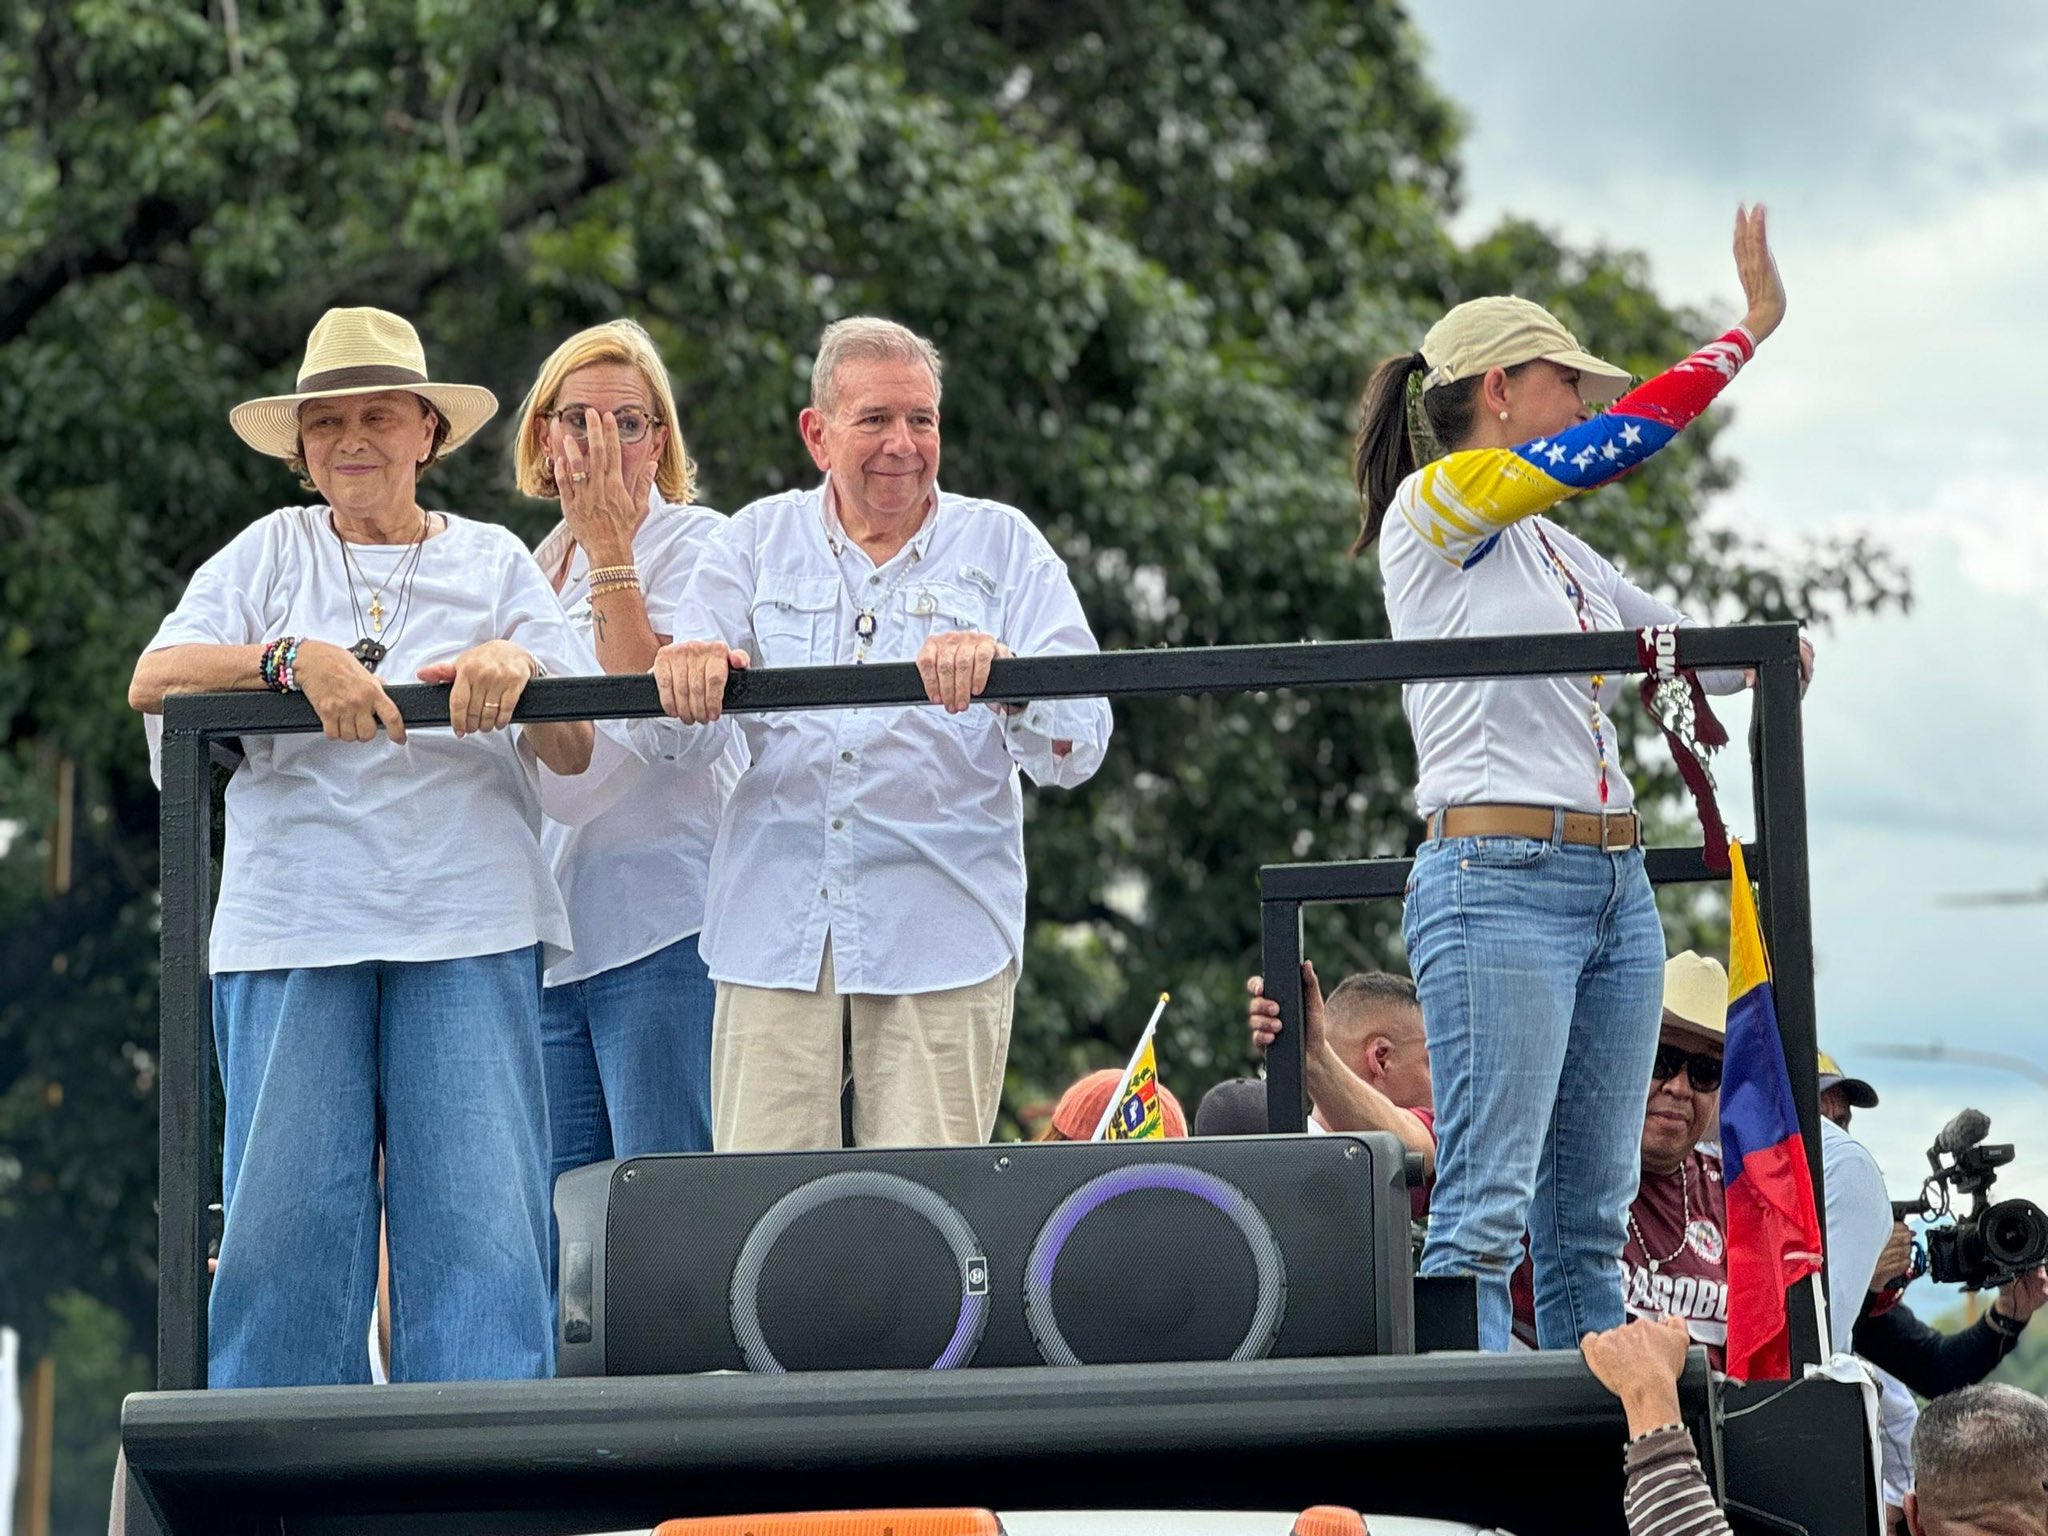 EN VIDEO: Multitud de carabobeños acompañan caravana de Edmundo González y María Corina Machado